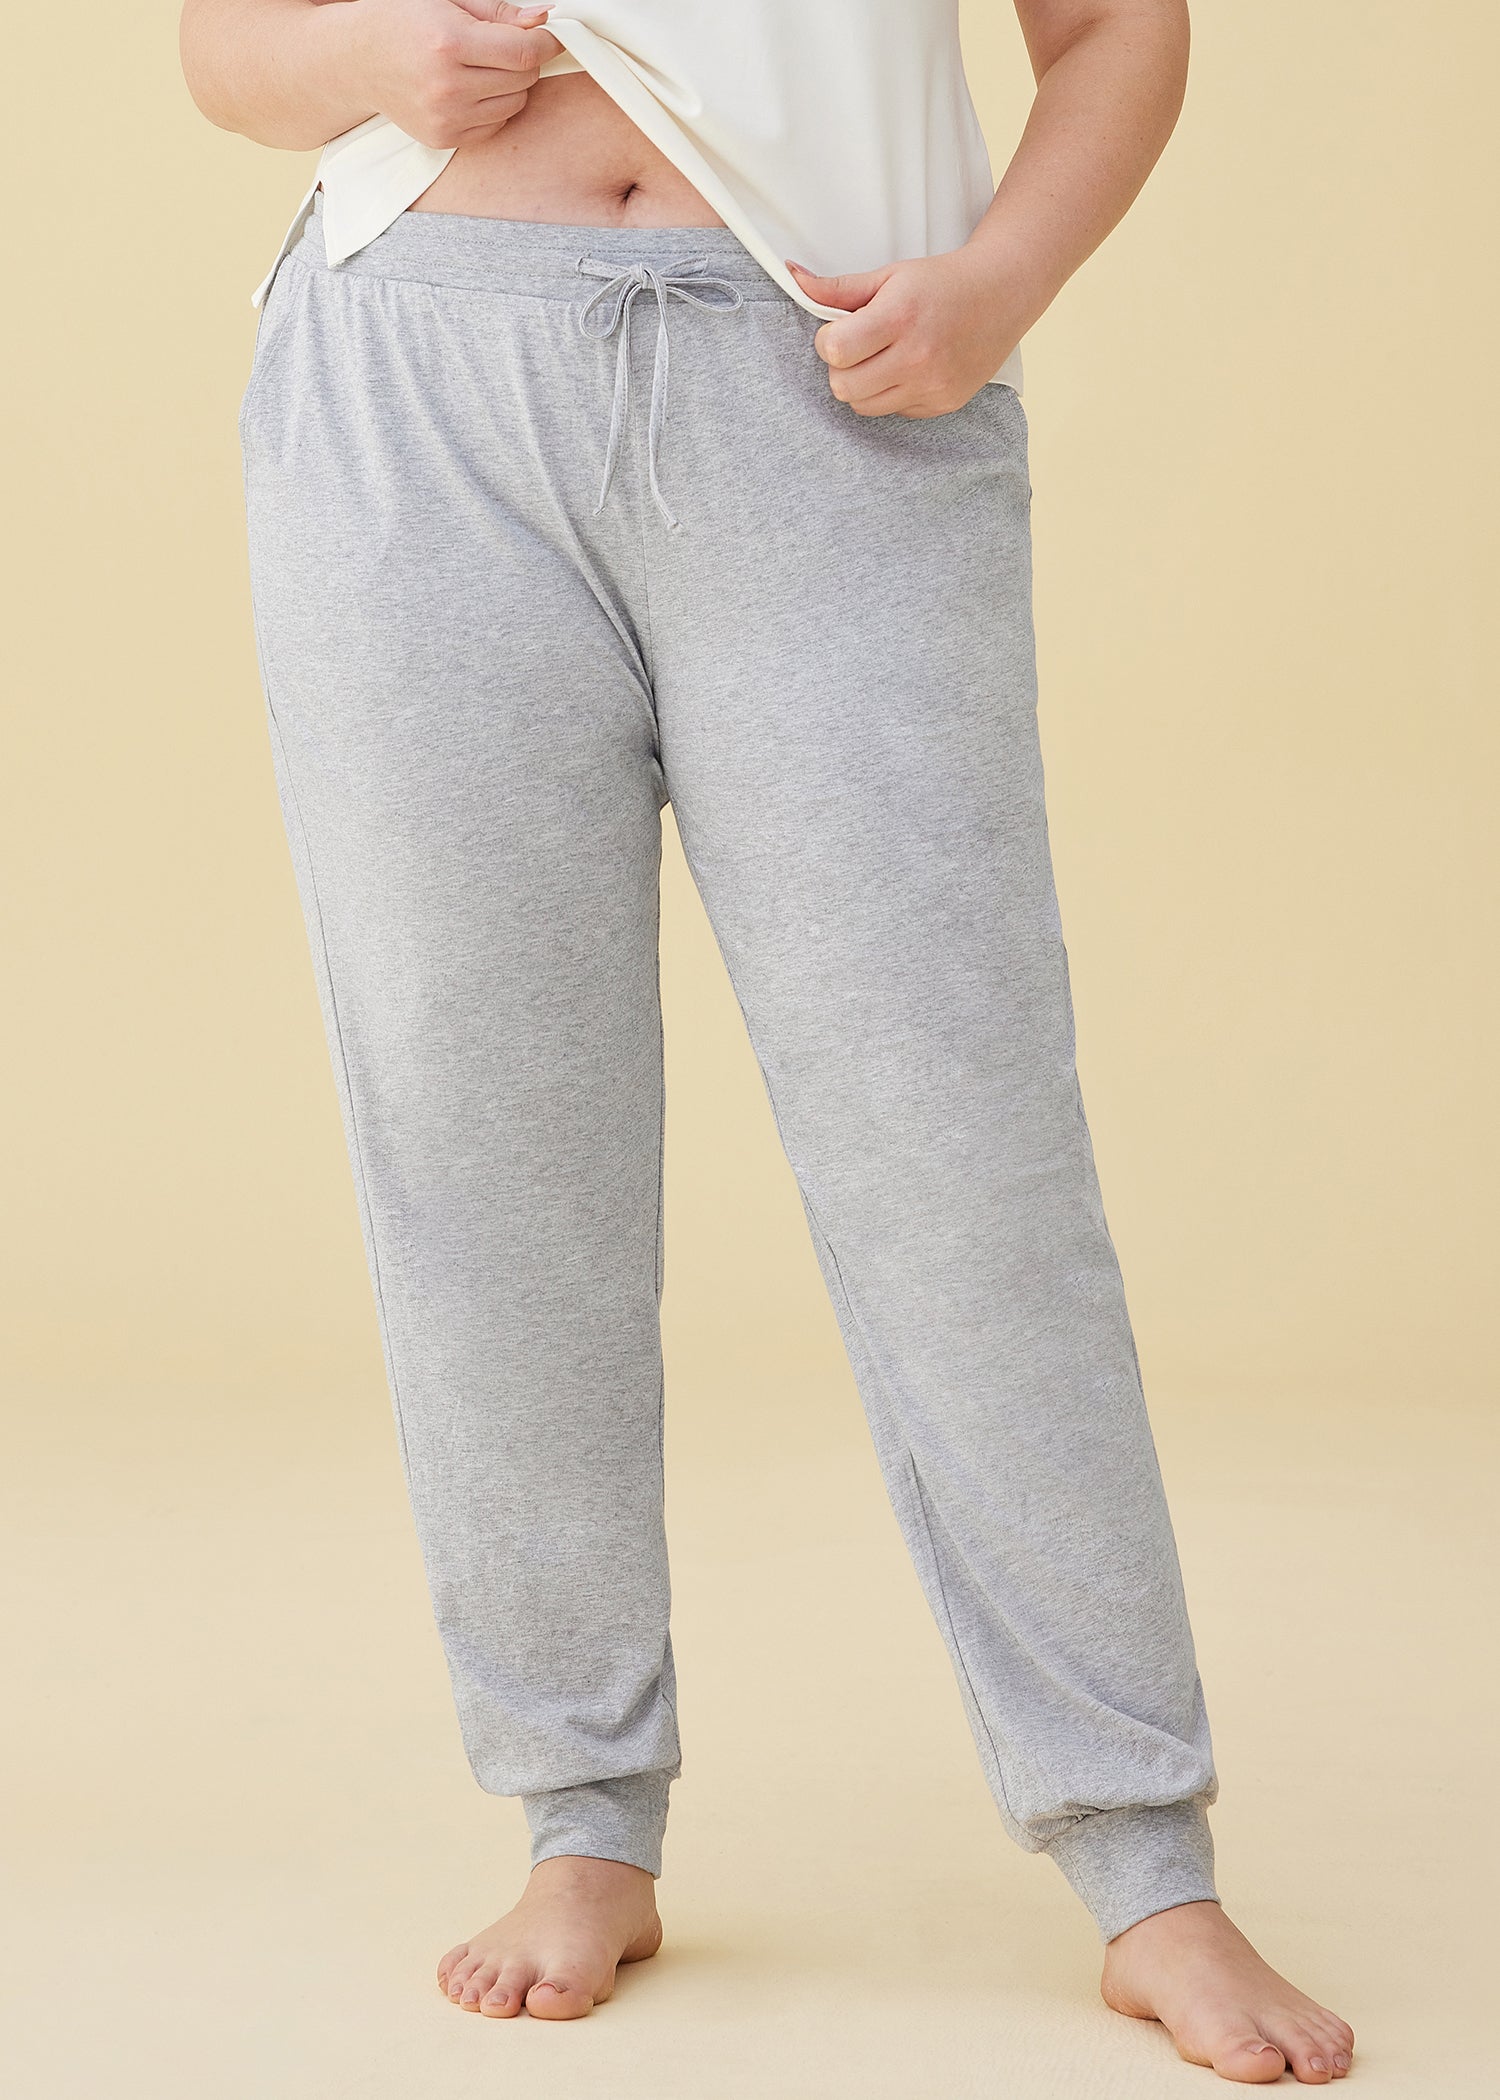 Women's Cotton Pajama Joggers Knit Lounge Pants